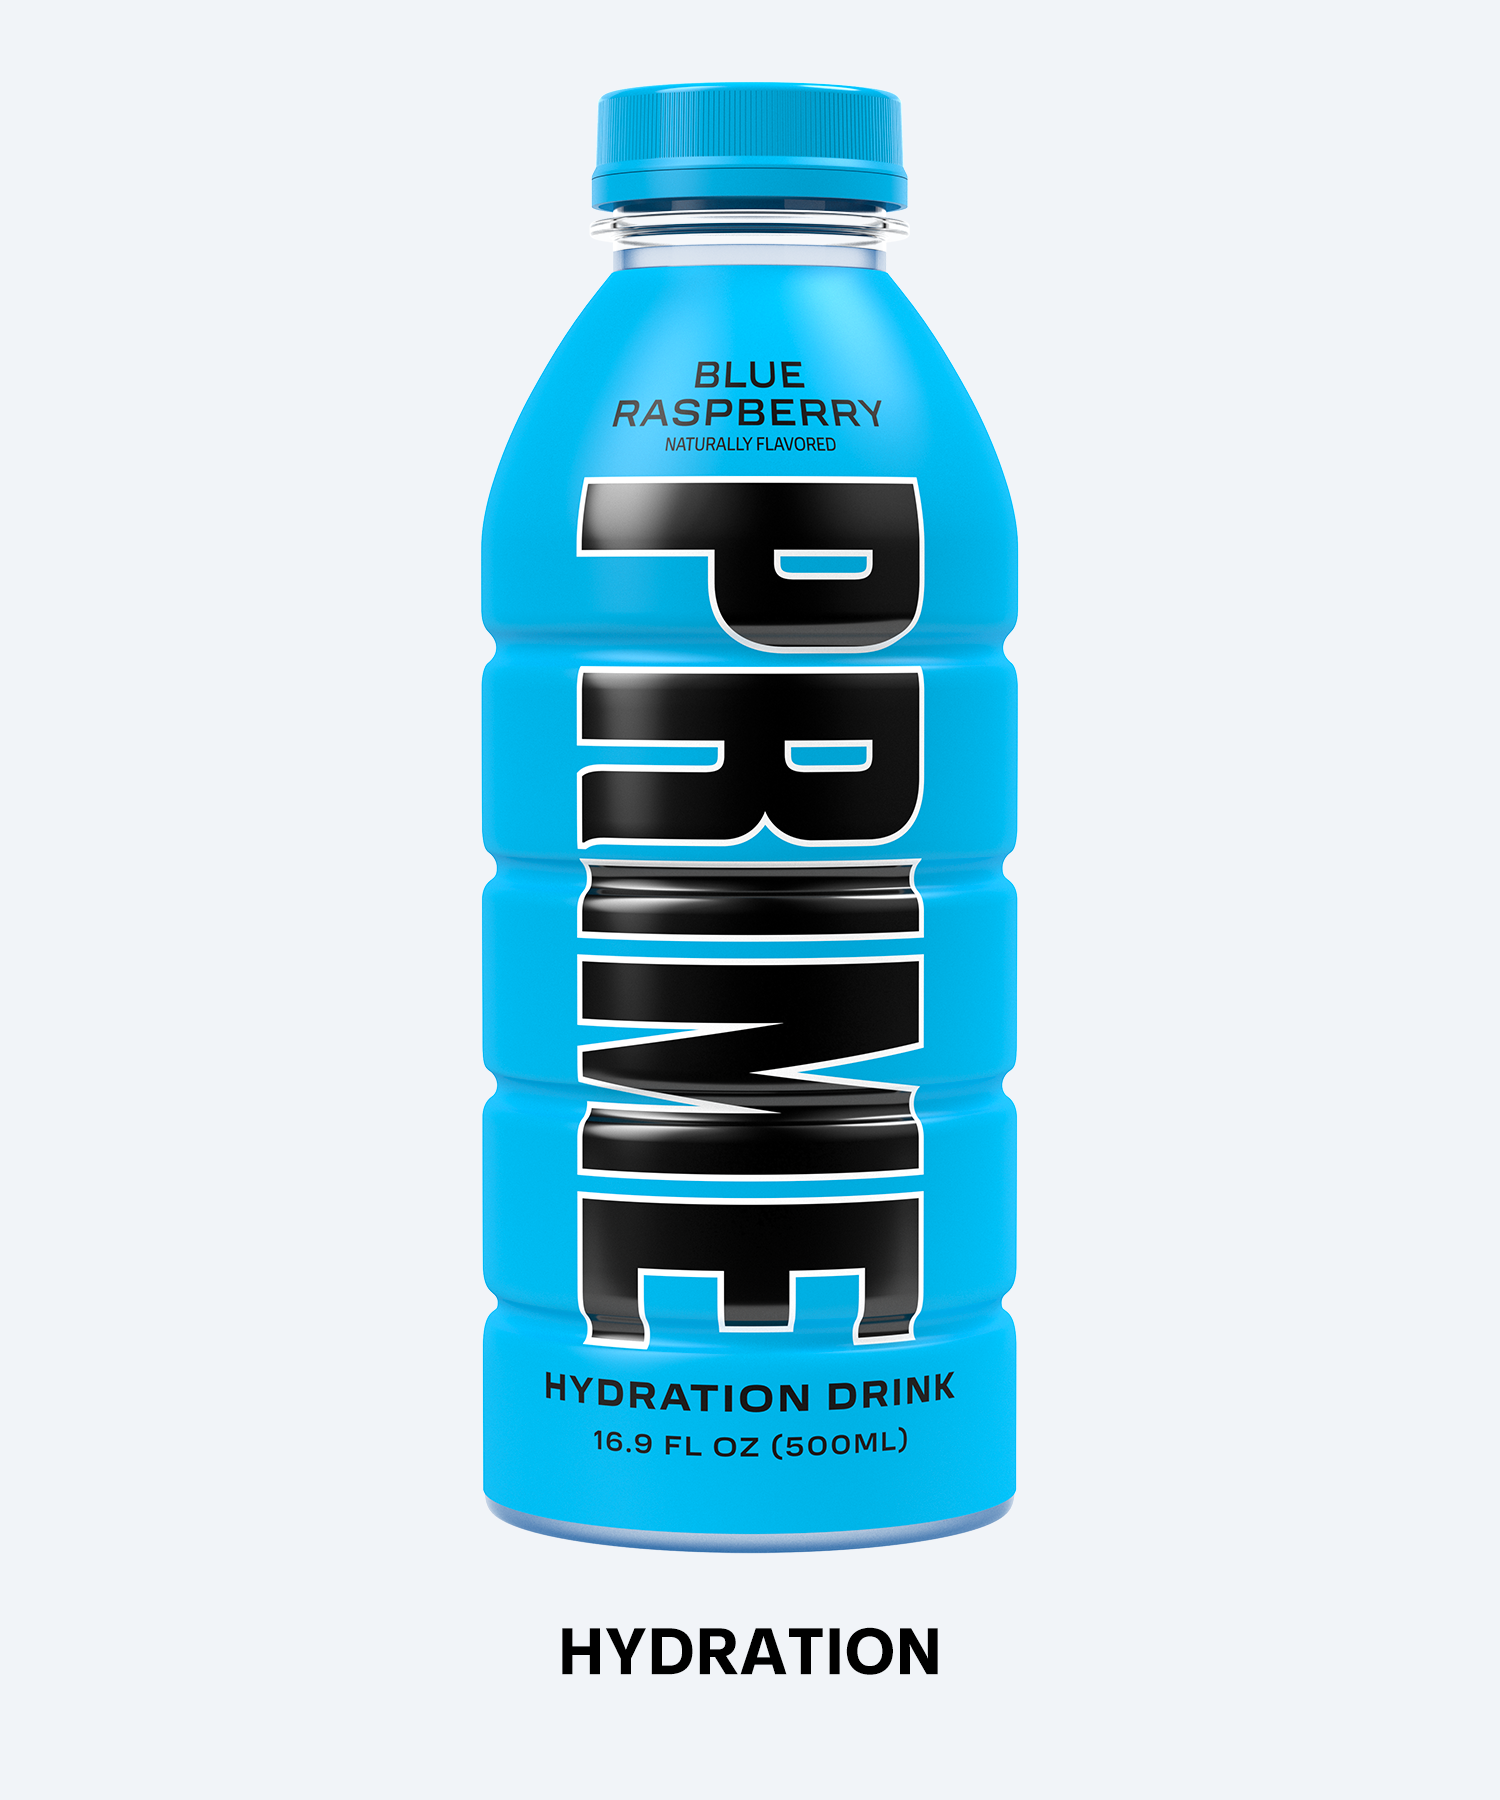 A Prime hydration bottle in flavor blue raspberry.